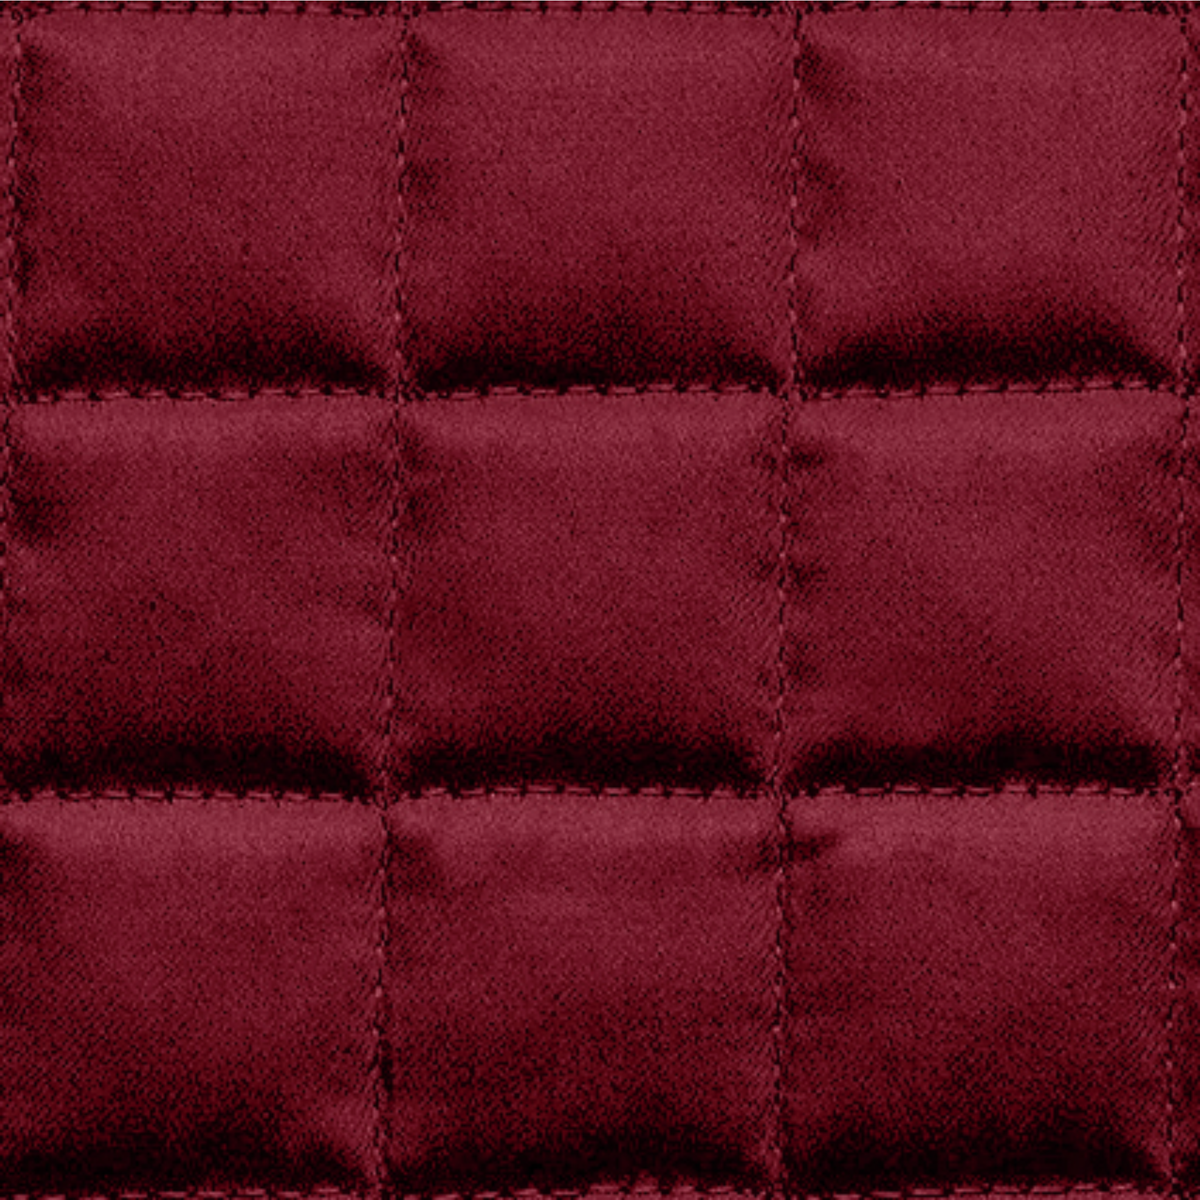 Fabric Closeup of Signoria Masaccio Bedding in Cardinale Red Color